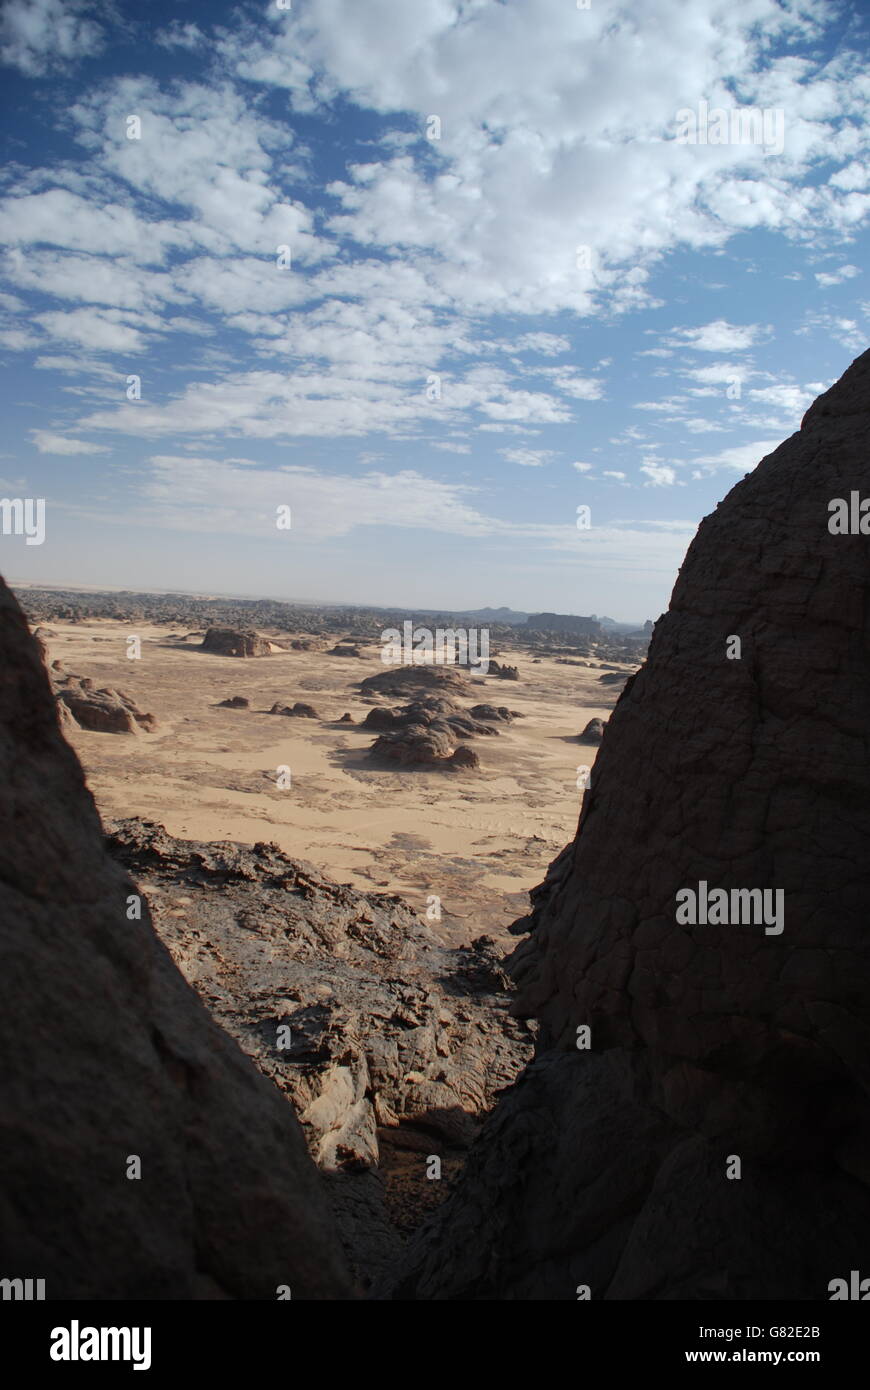 Wüste, Algerien, bewölkter Himmel, Sand, Felsen, Berge, Schatten, Textfreiraum Stockfoto